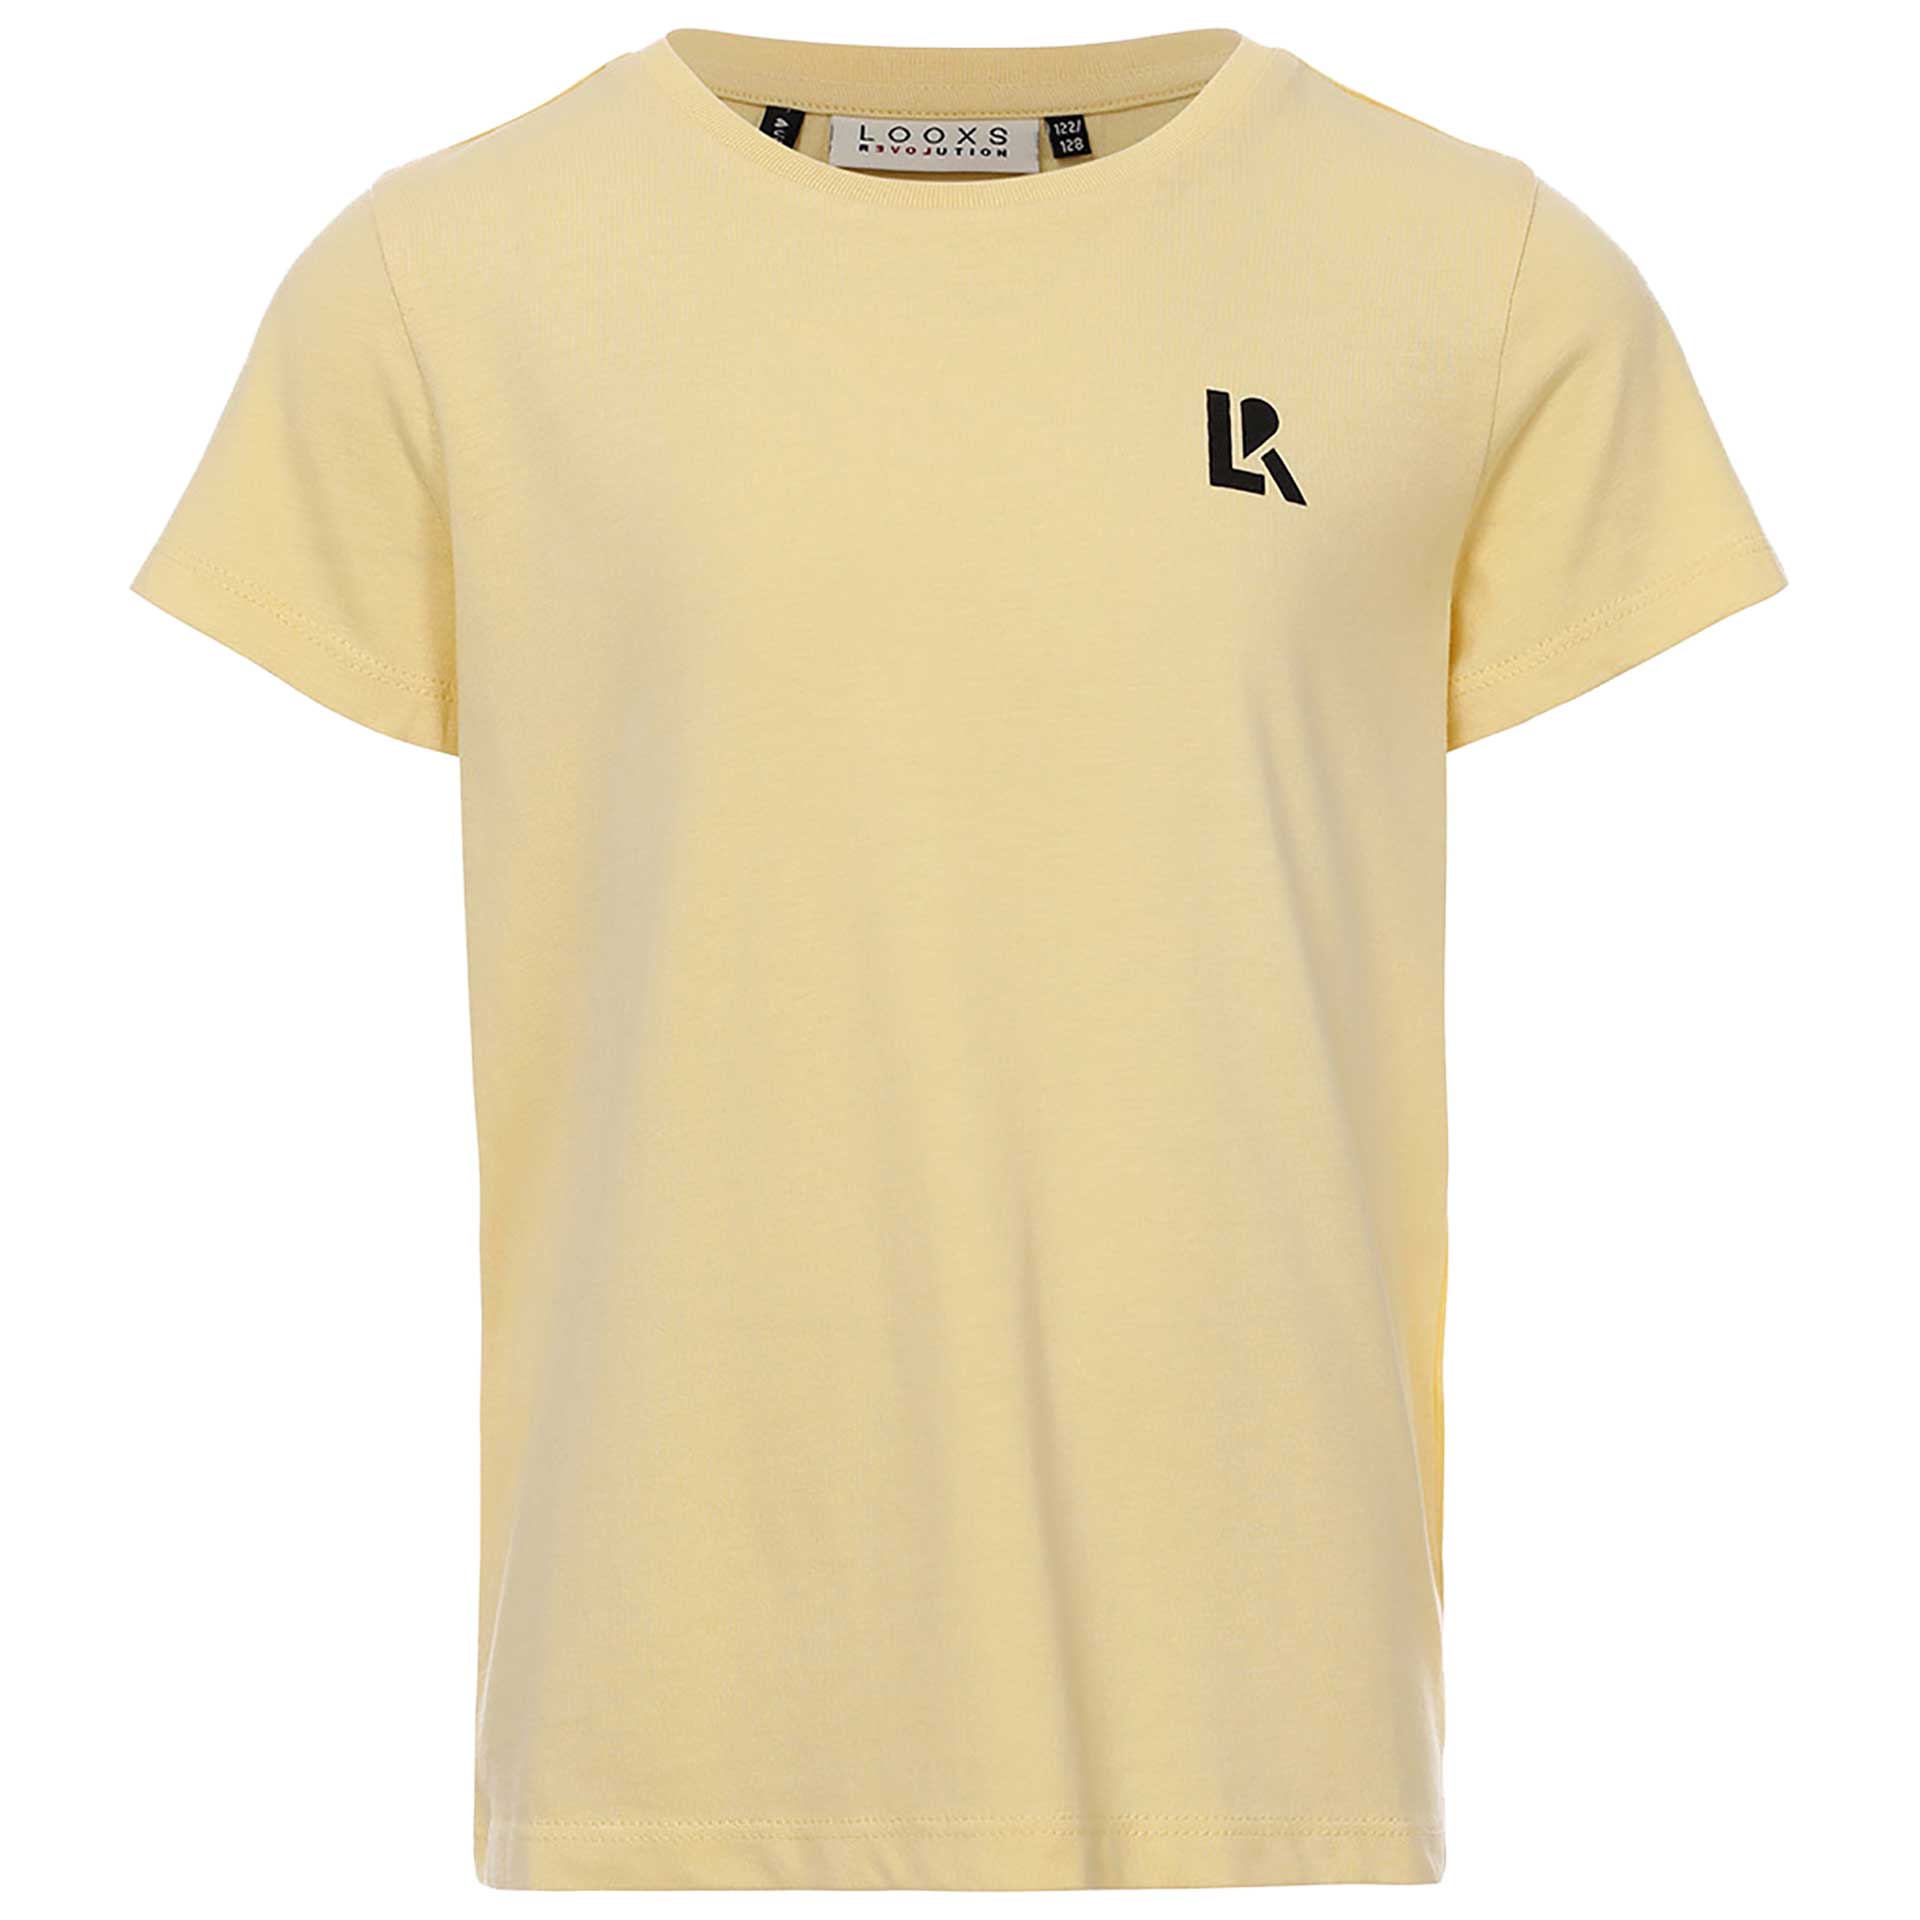 Looxs T-Shirt 2